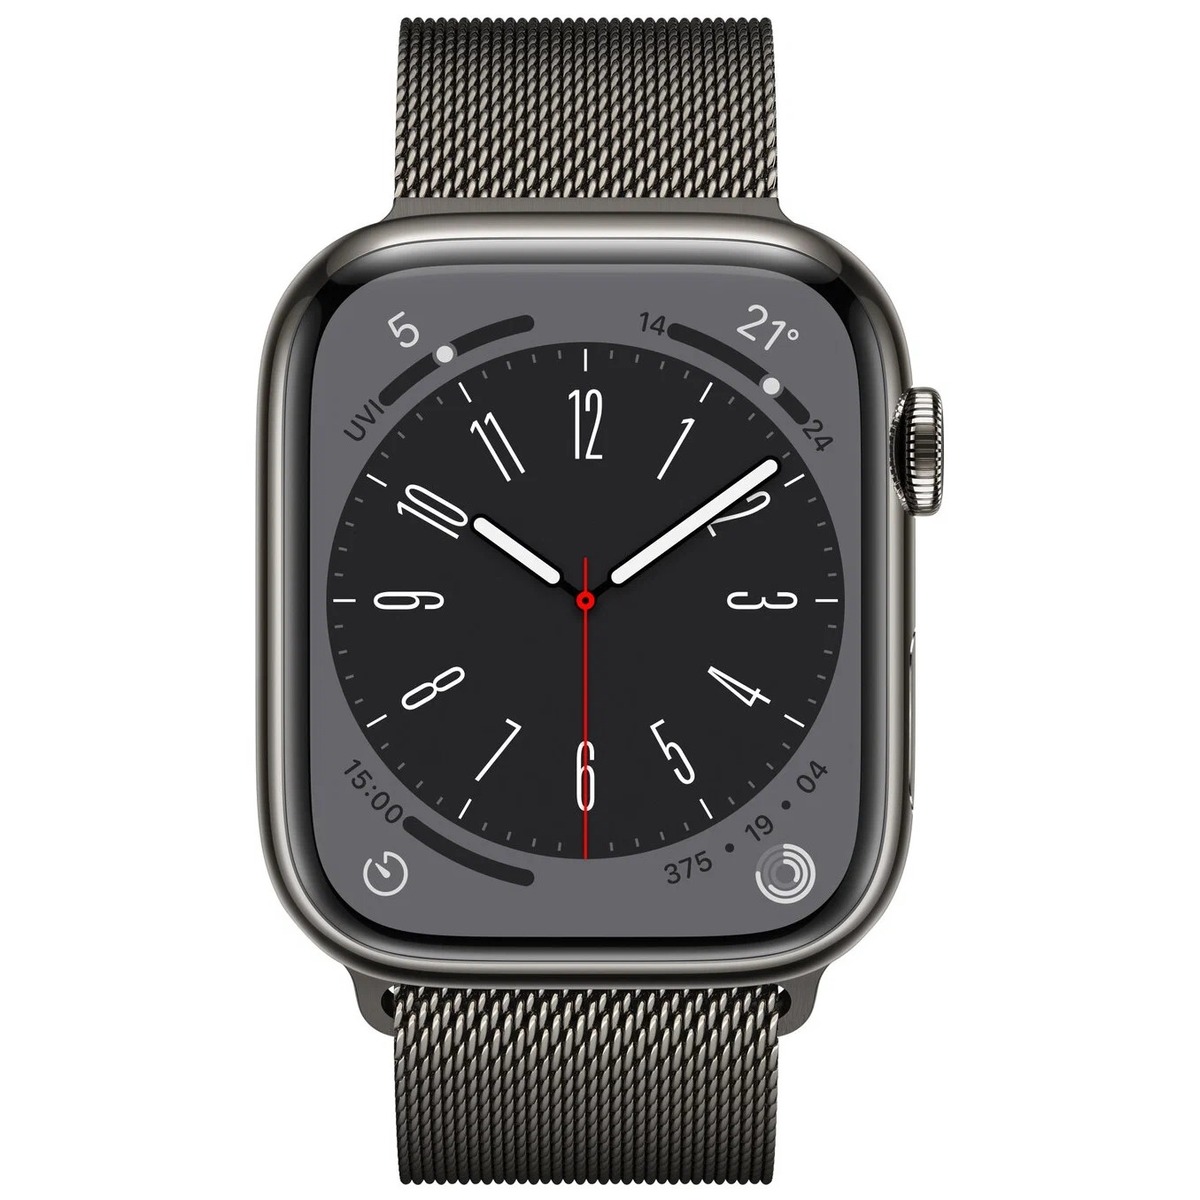 Умные часы Apple Watch Series 8 45mm Stainless Steel Case with Milanese Loop (Цвет: Graphite)